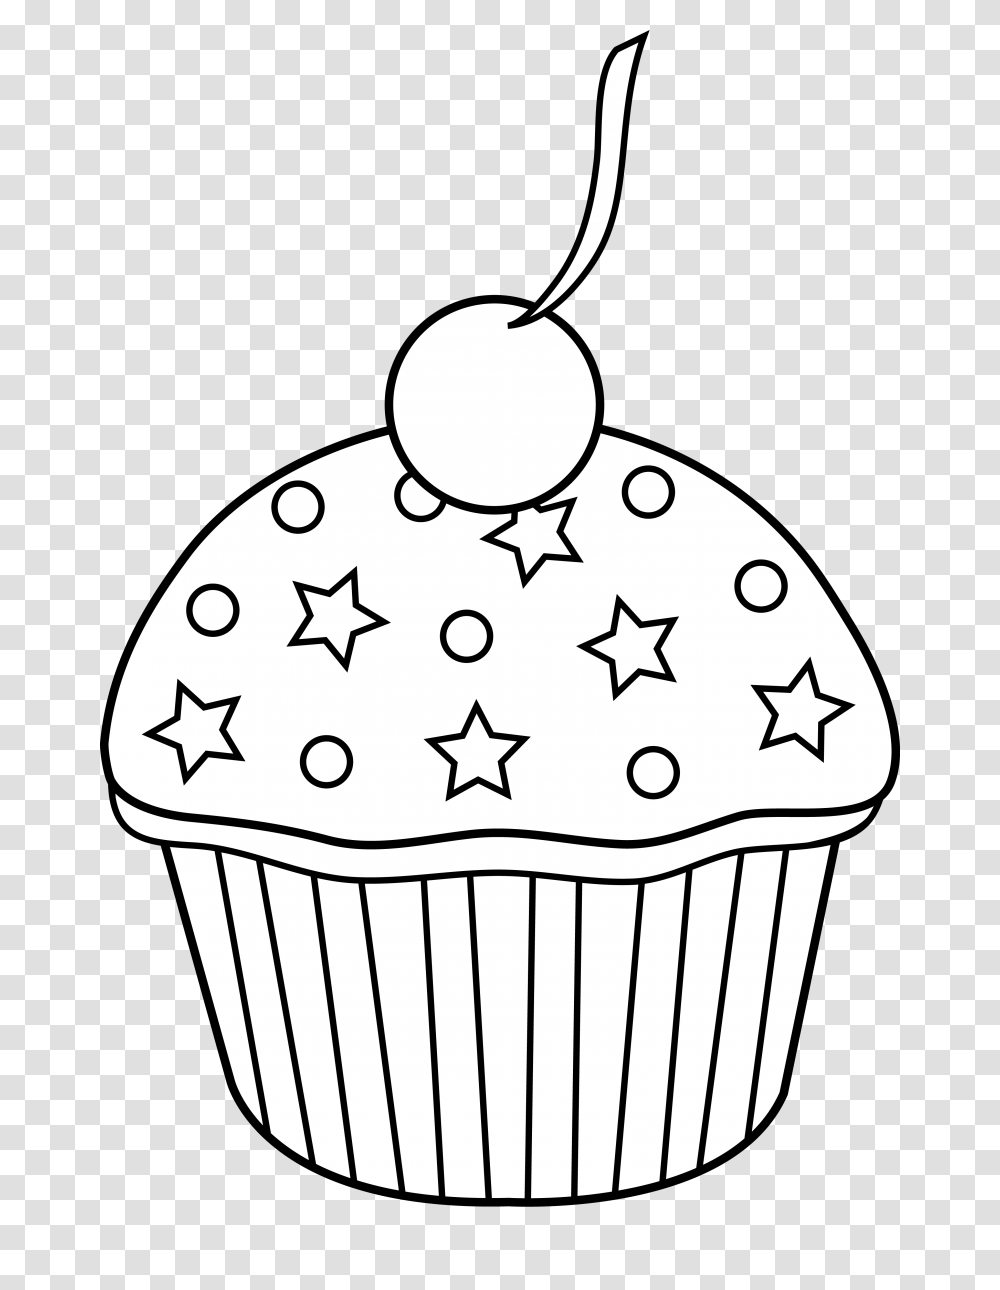 Cupcakes Cupcake Clipart Free Cupcake Clipart Free Black, Cream, Dessert, Food, Creme Transparent Png